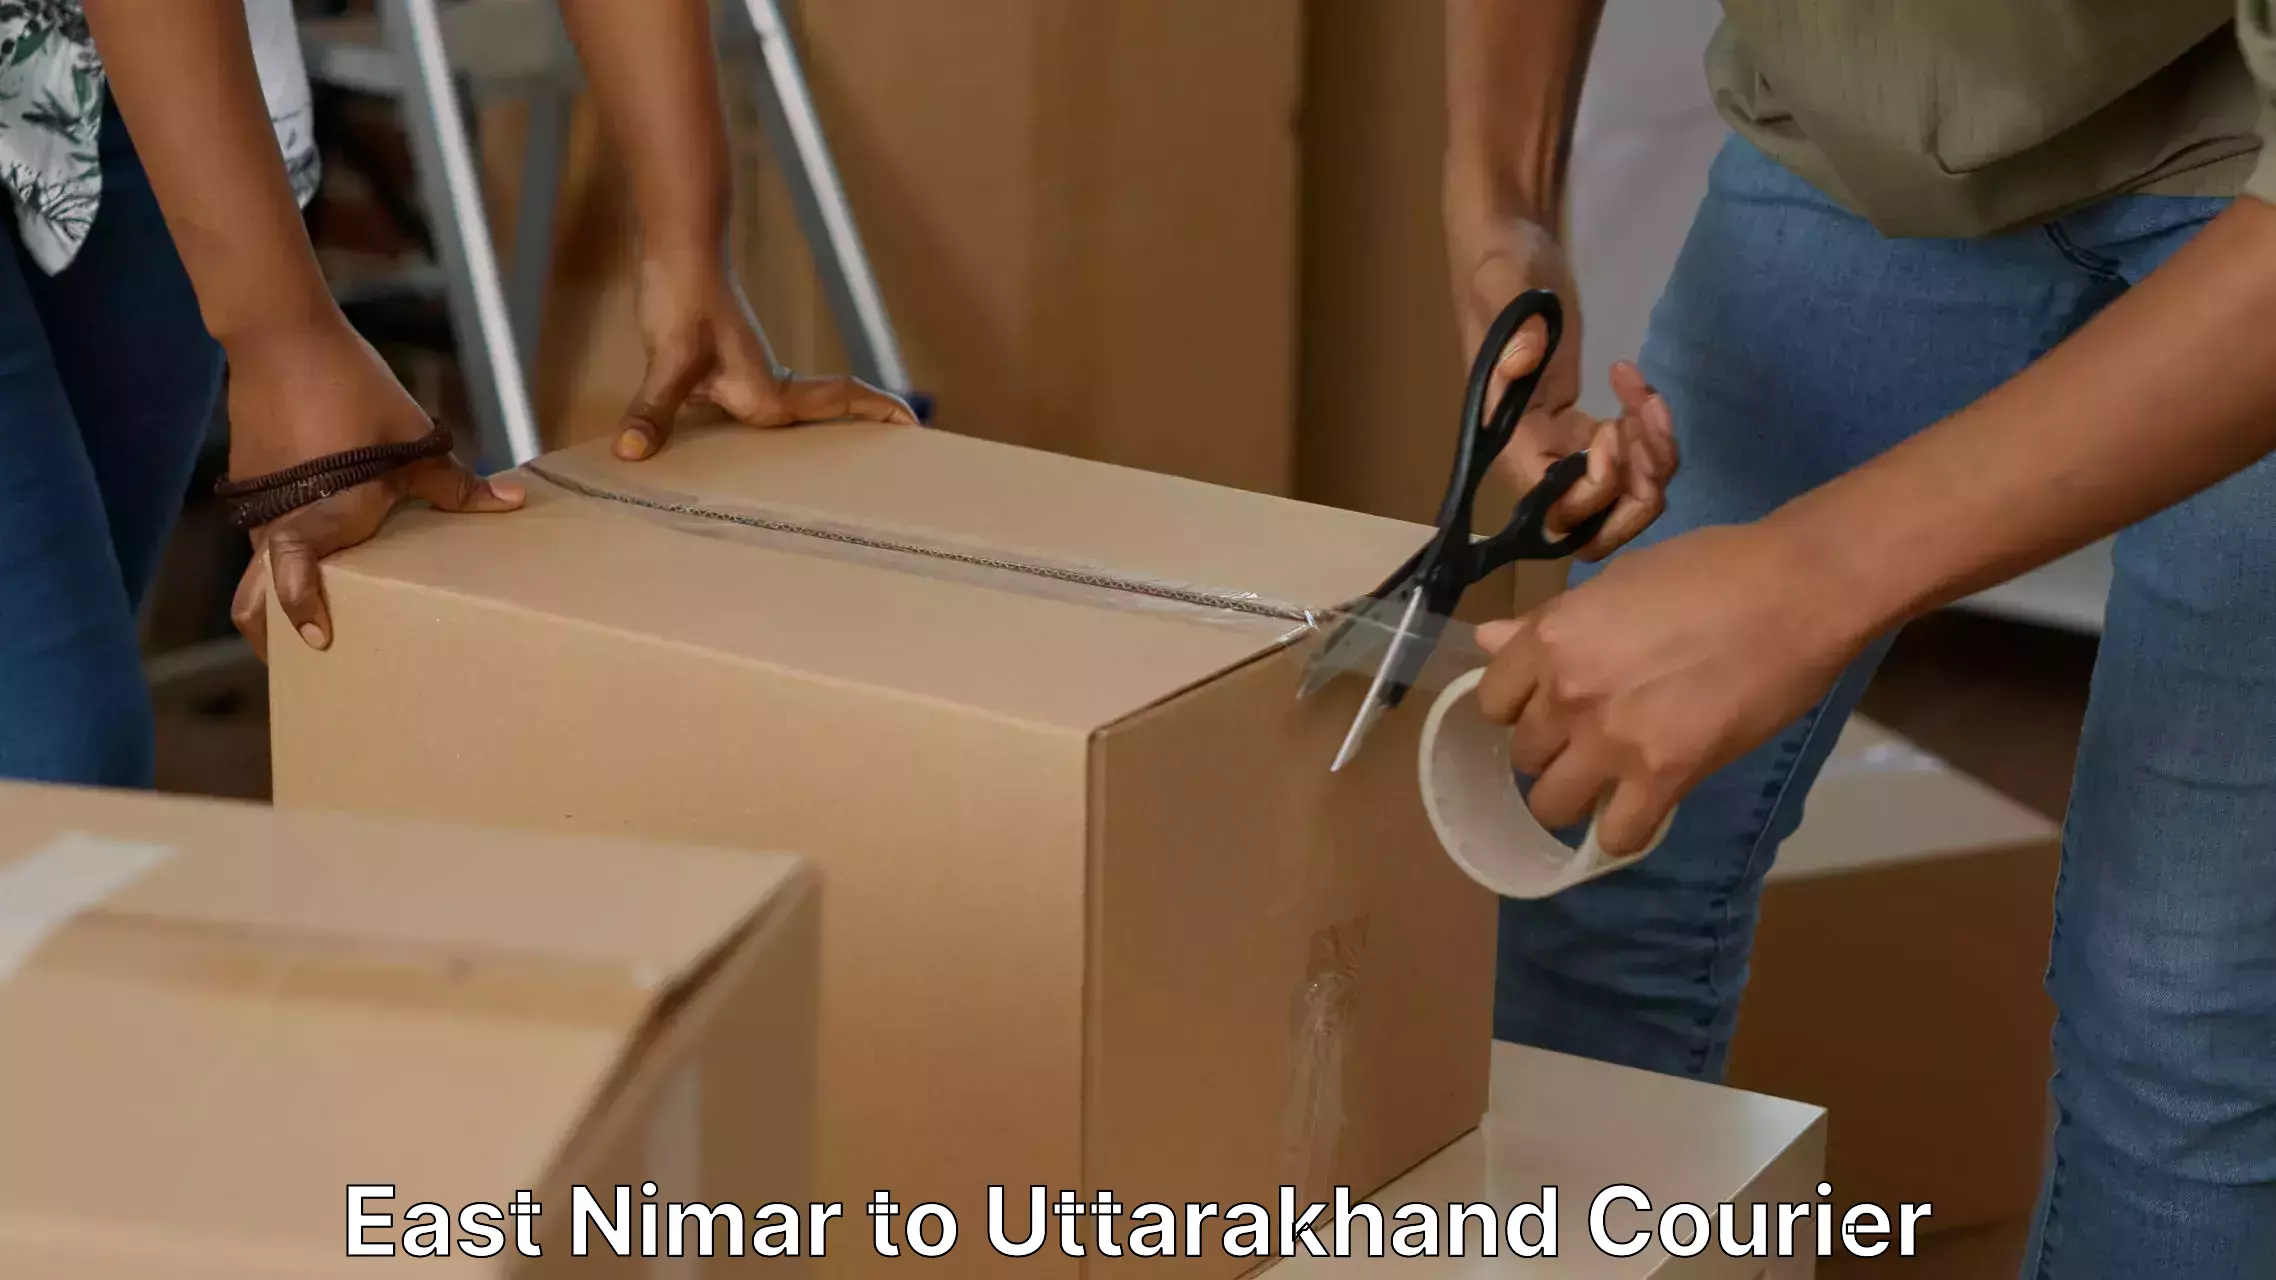 Professional moving company East Nimar to Paithani